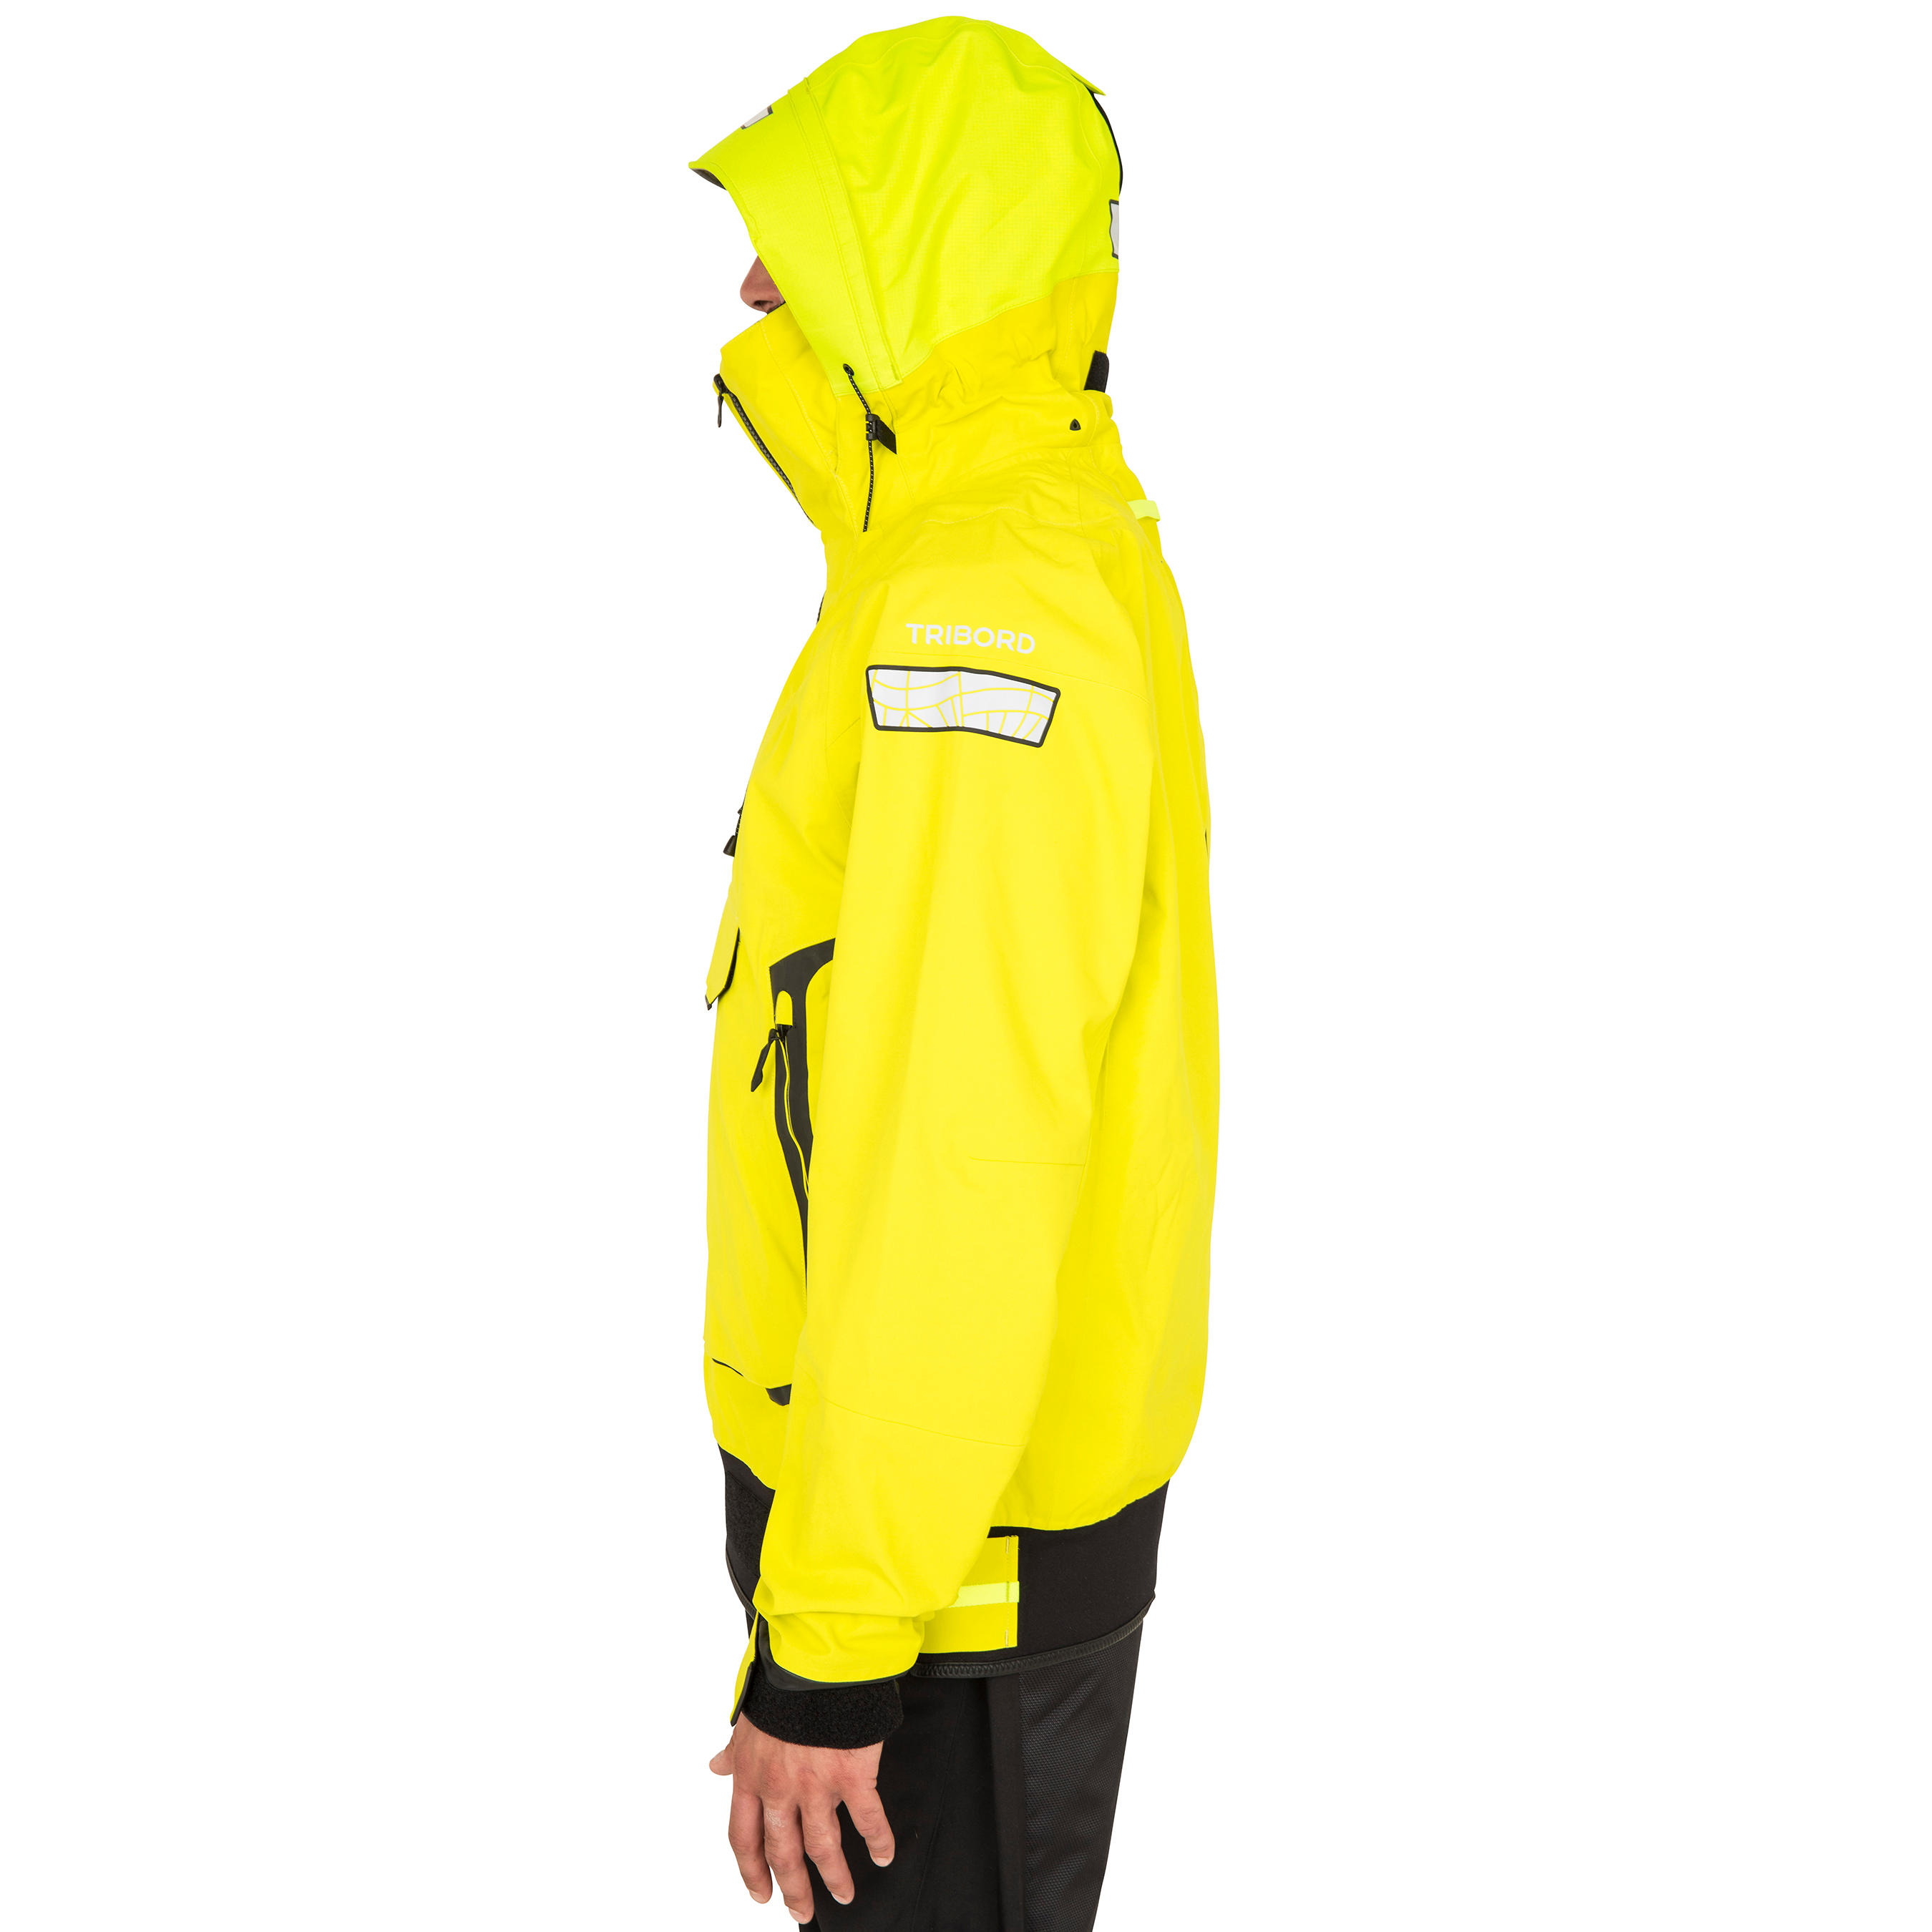 Offshore Race men's sailing boat jacket yellow 4/15